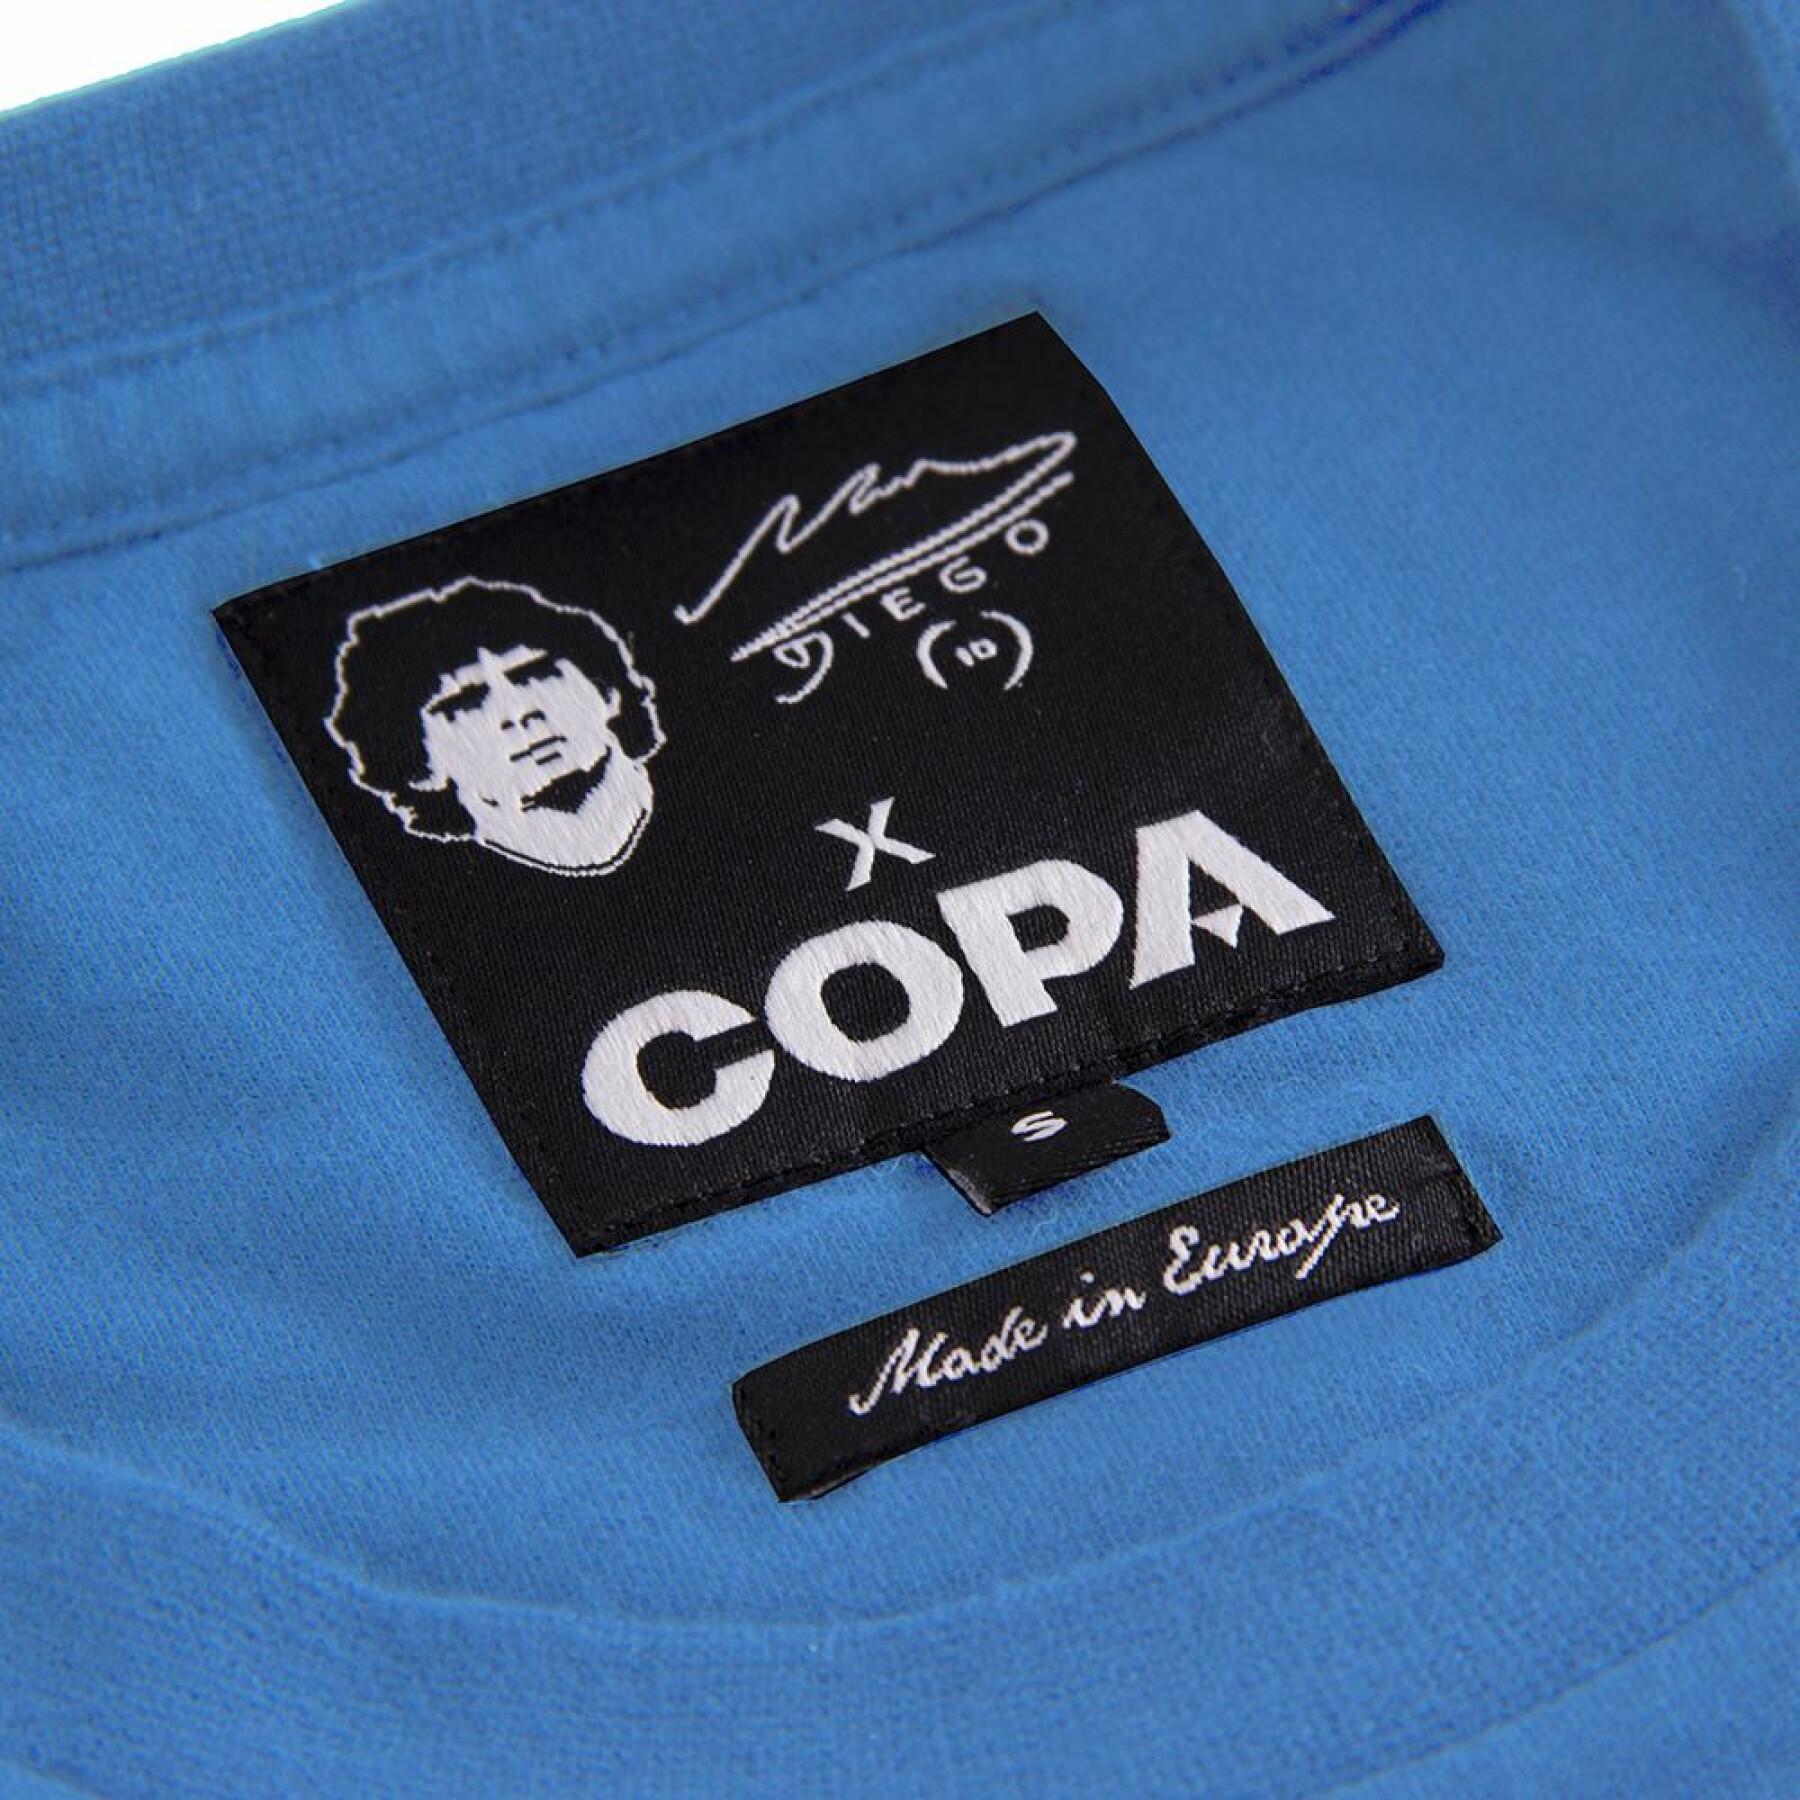 Embroidered T-shirt Copa SSC Napoli Maradona